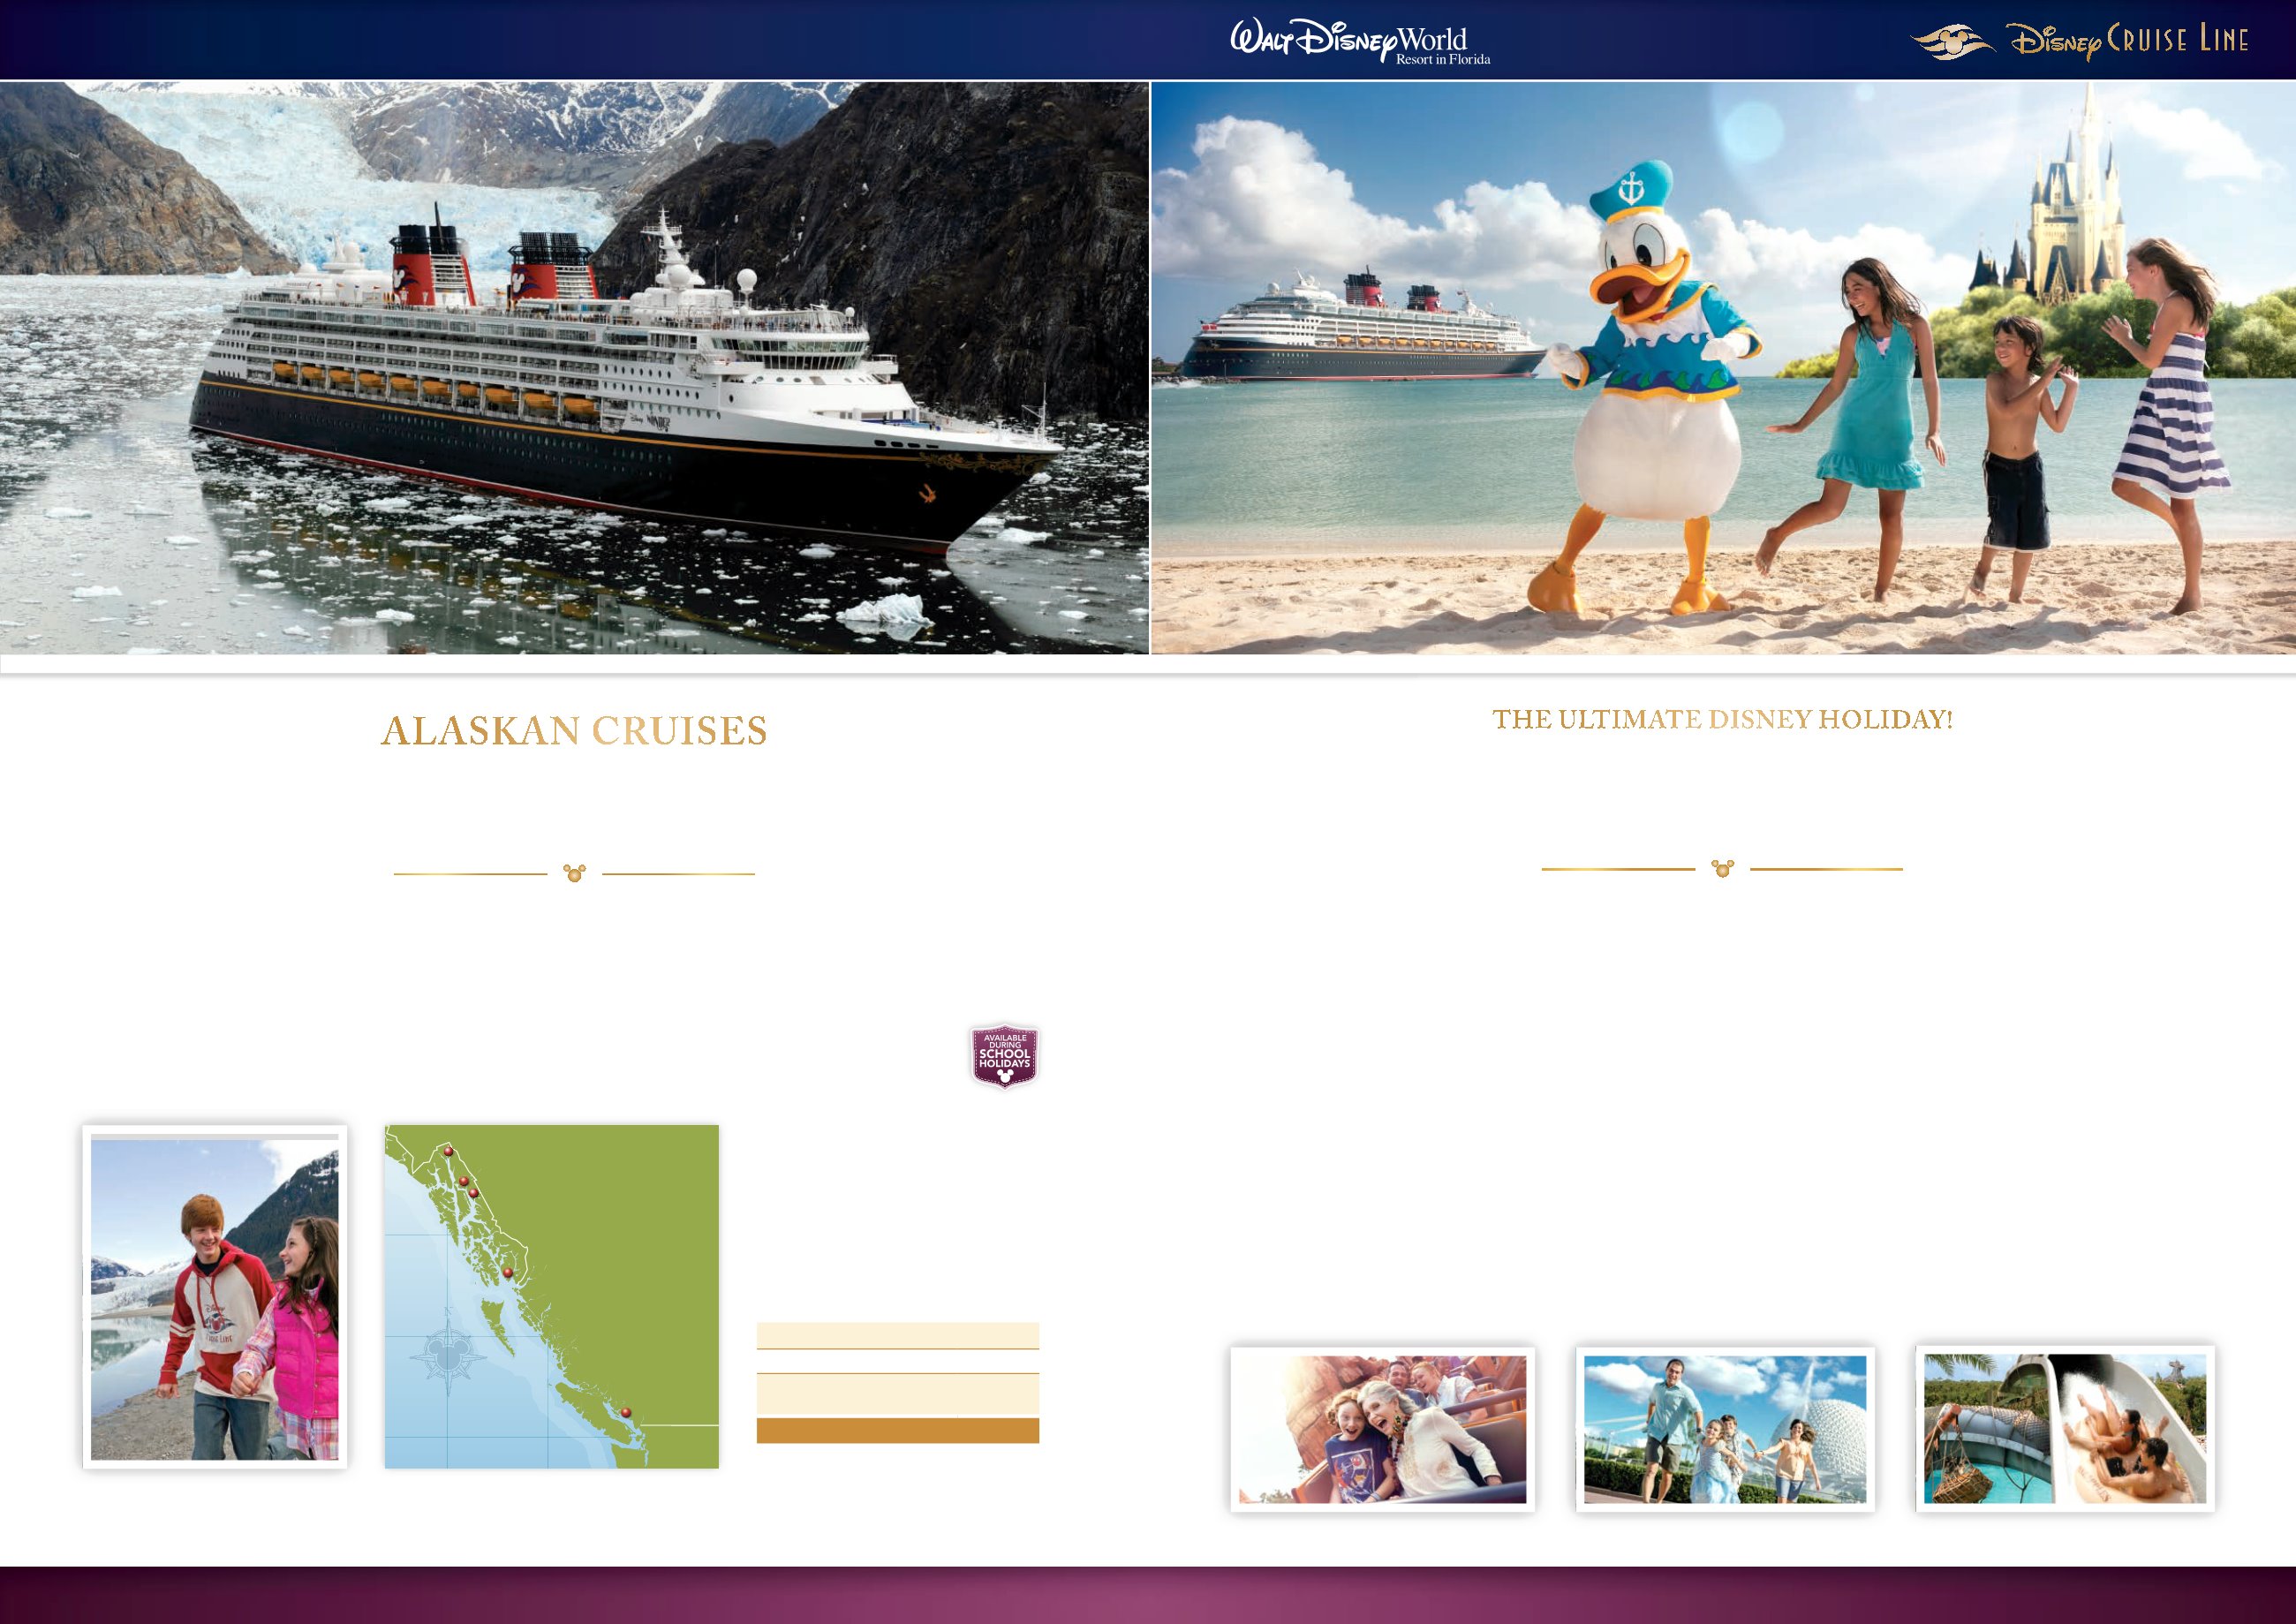 disney cruise brochure